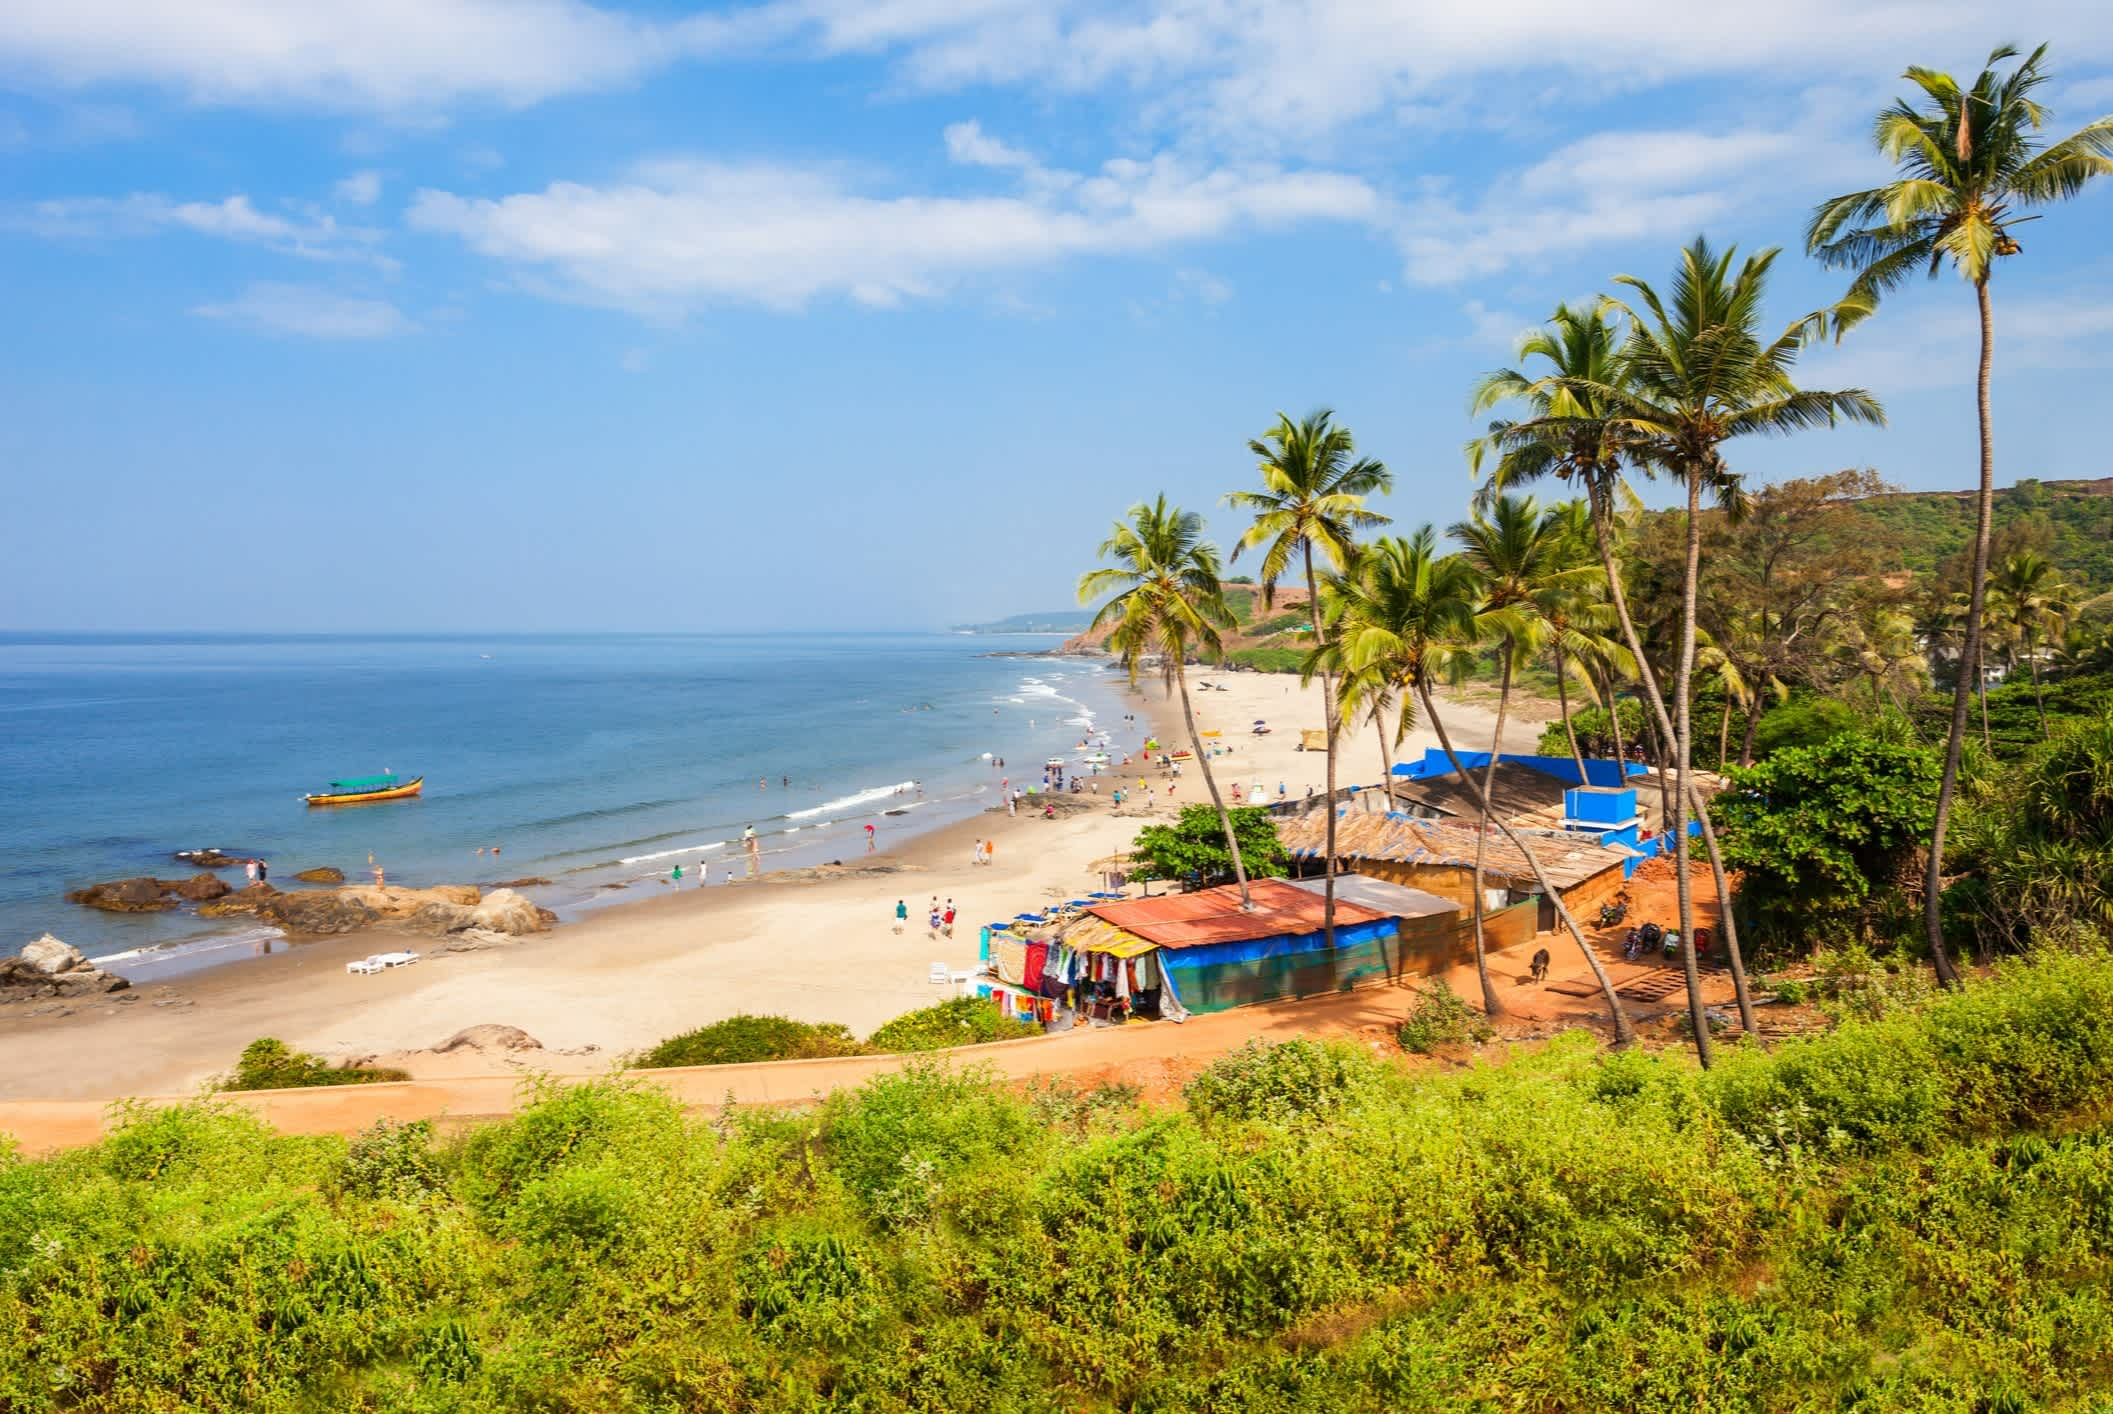 Panoramablick von Ozran Beach in Nord-Goa, Indien

